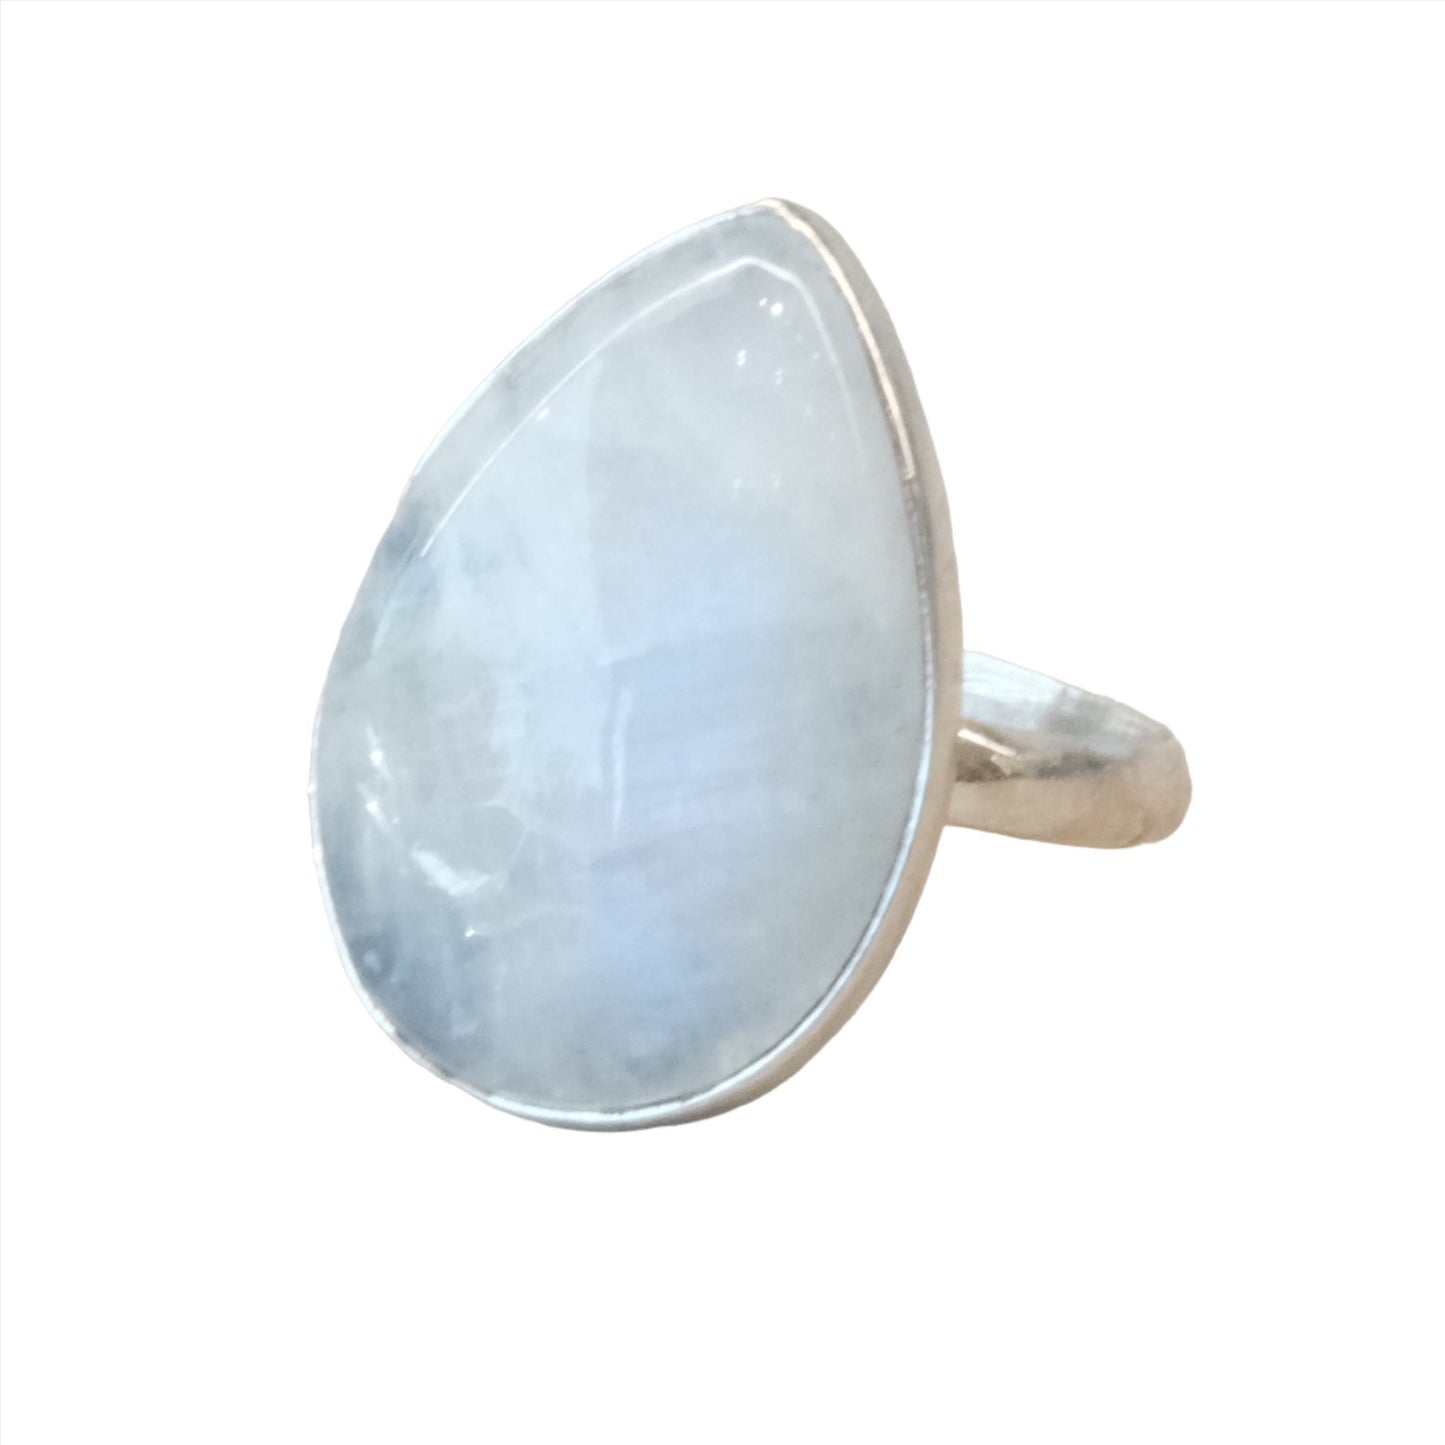 Moonstone Teardrop Sterling Silver Ring Size 8